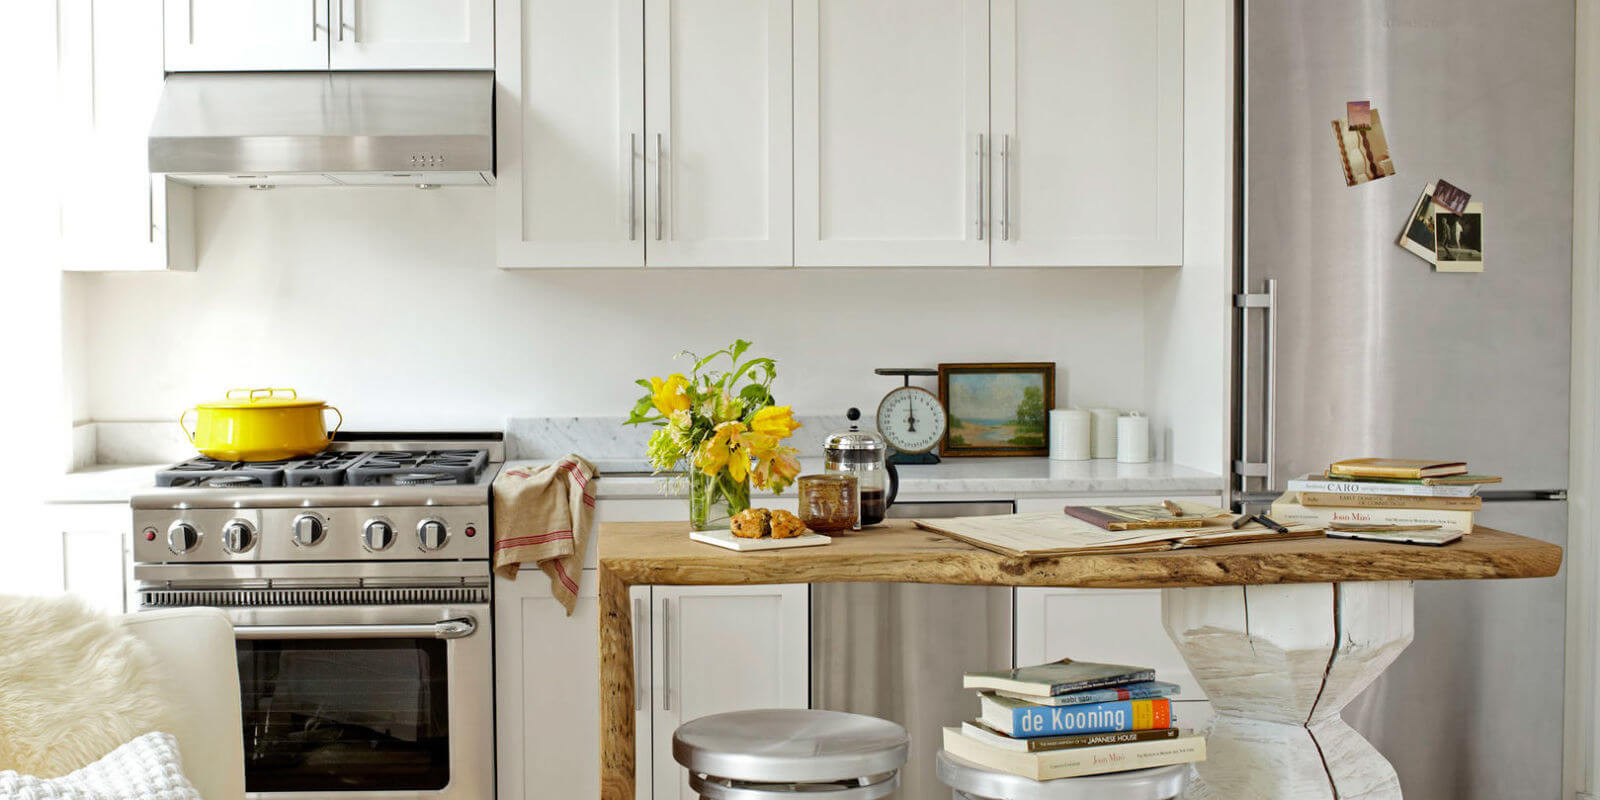 Small Apartment Kitchen Design Ideas
 12 Ideas about Small Apartment Kitchen Design TheyDesign